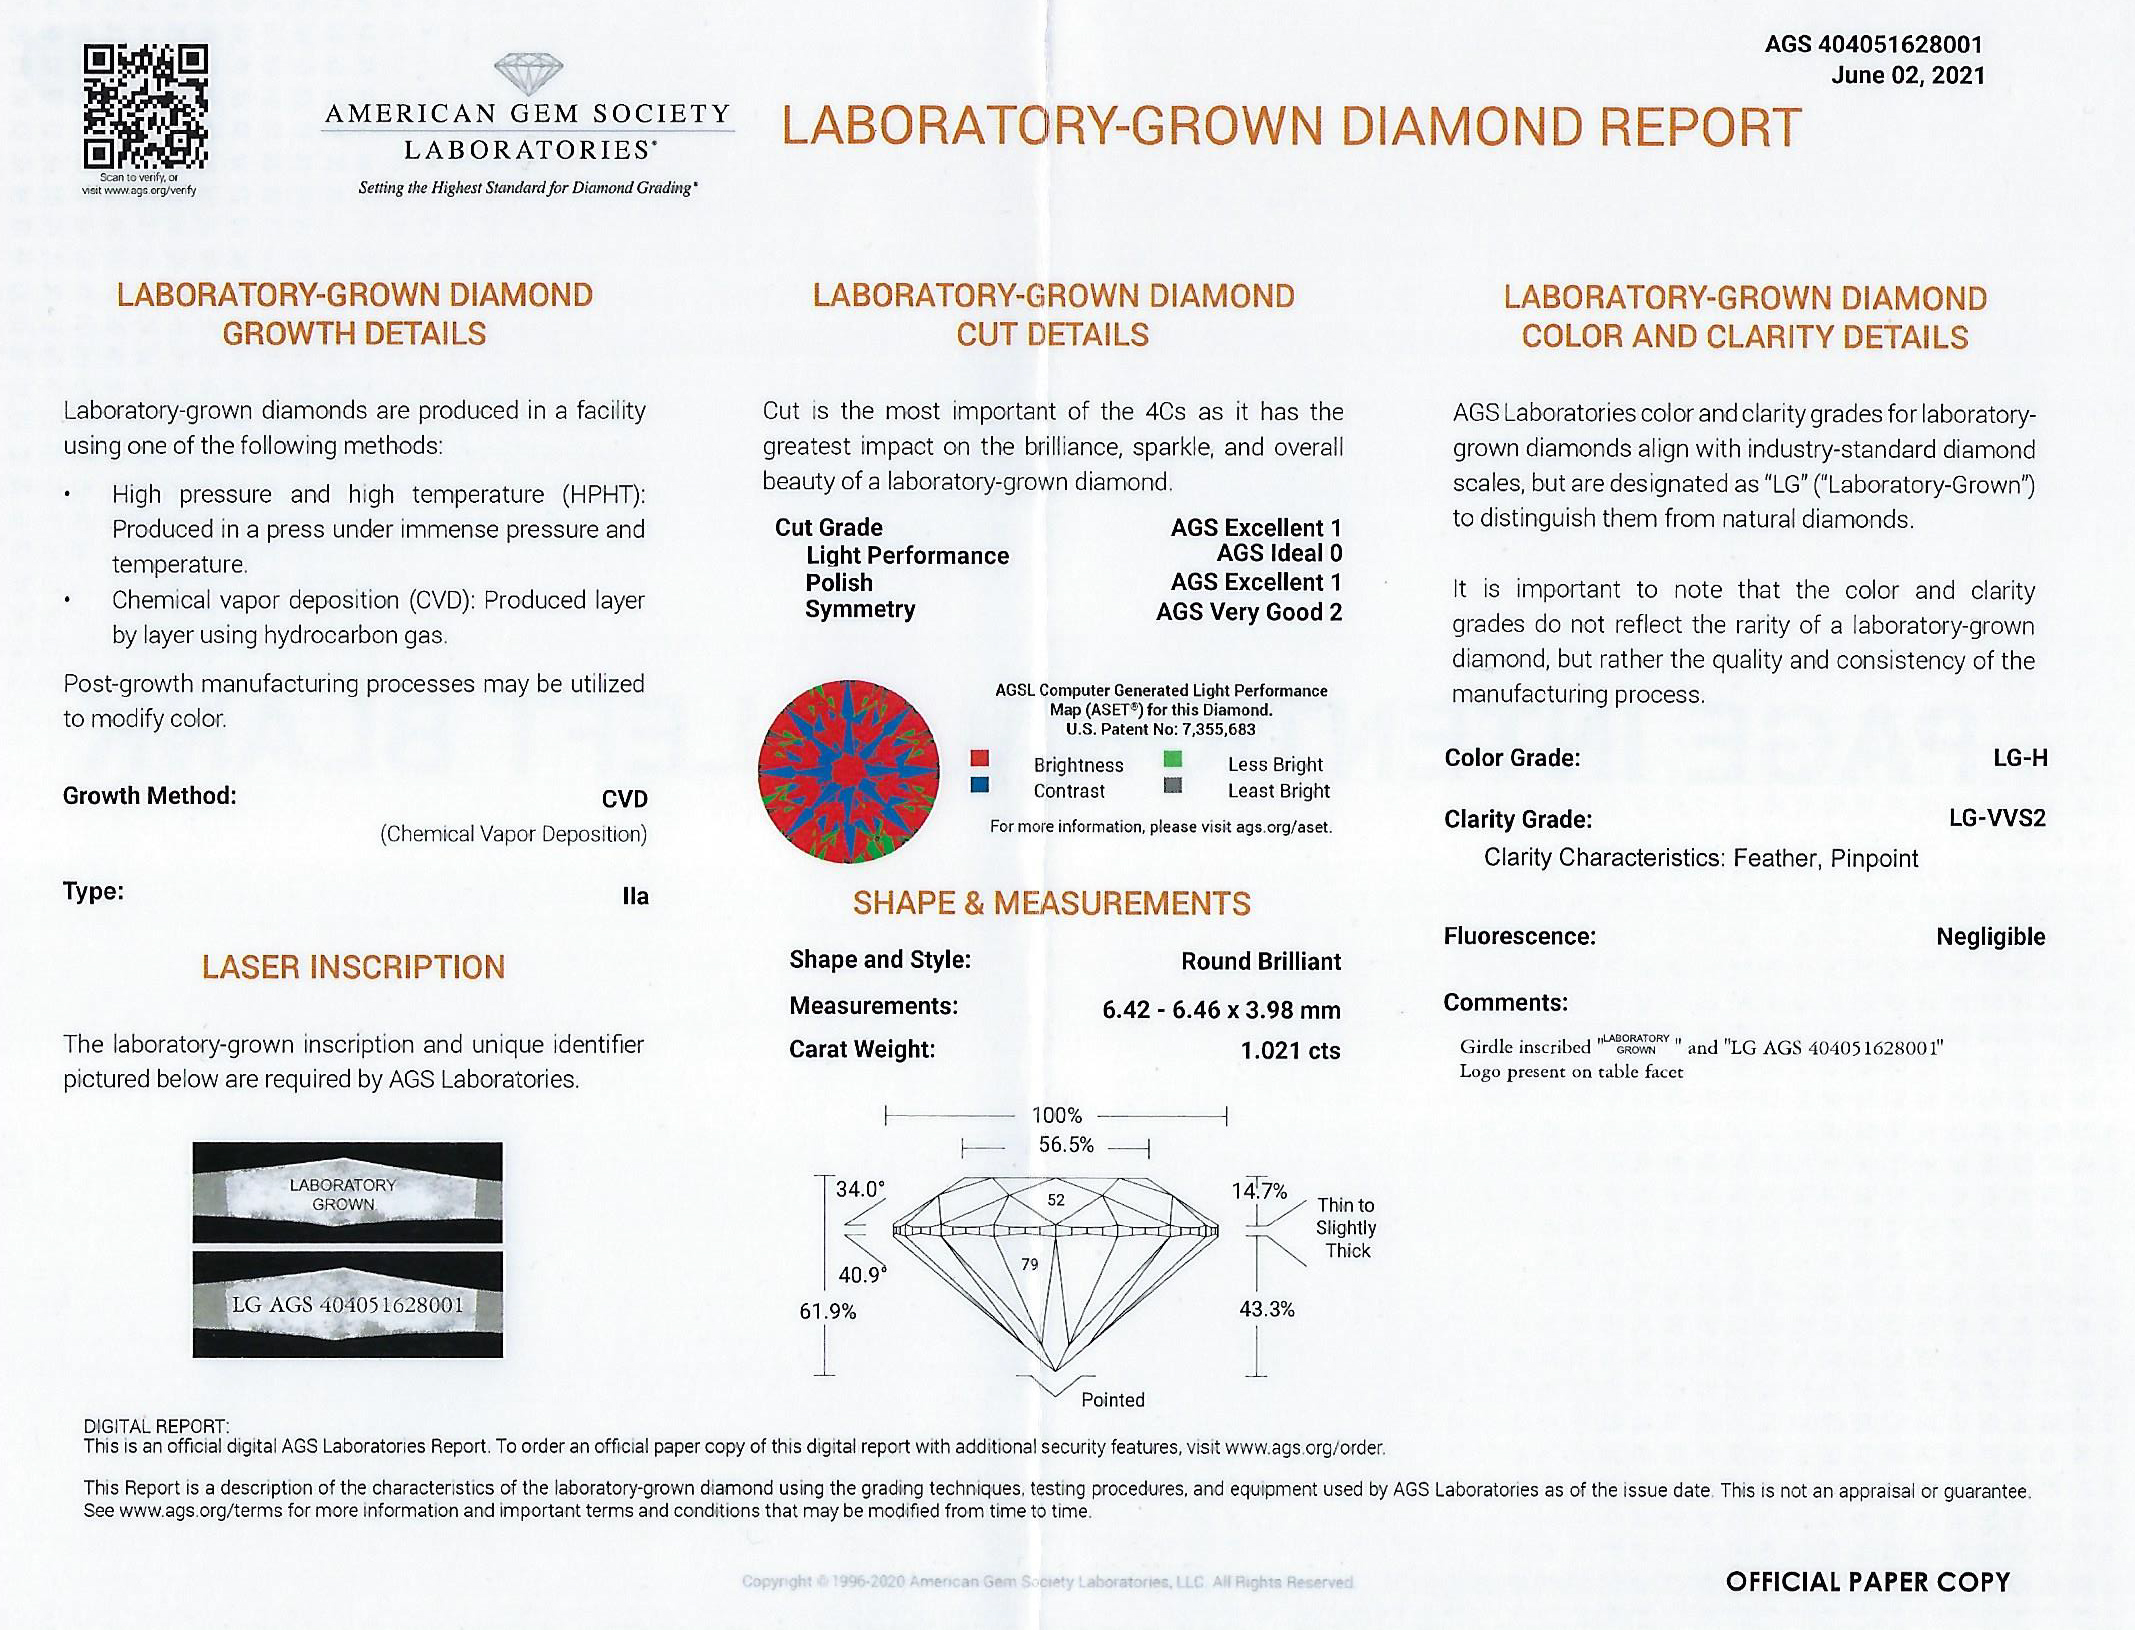 AGSL lab-grown diamonds report